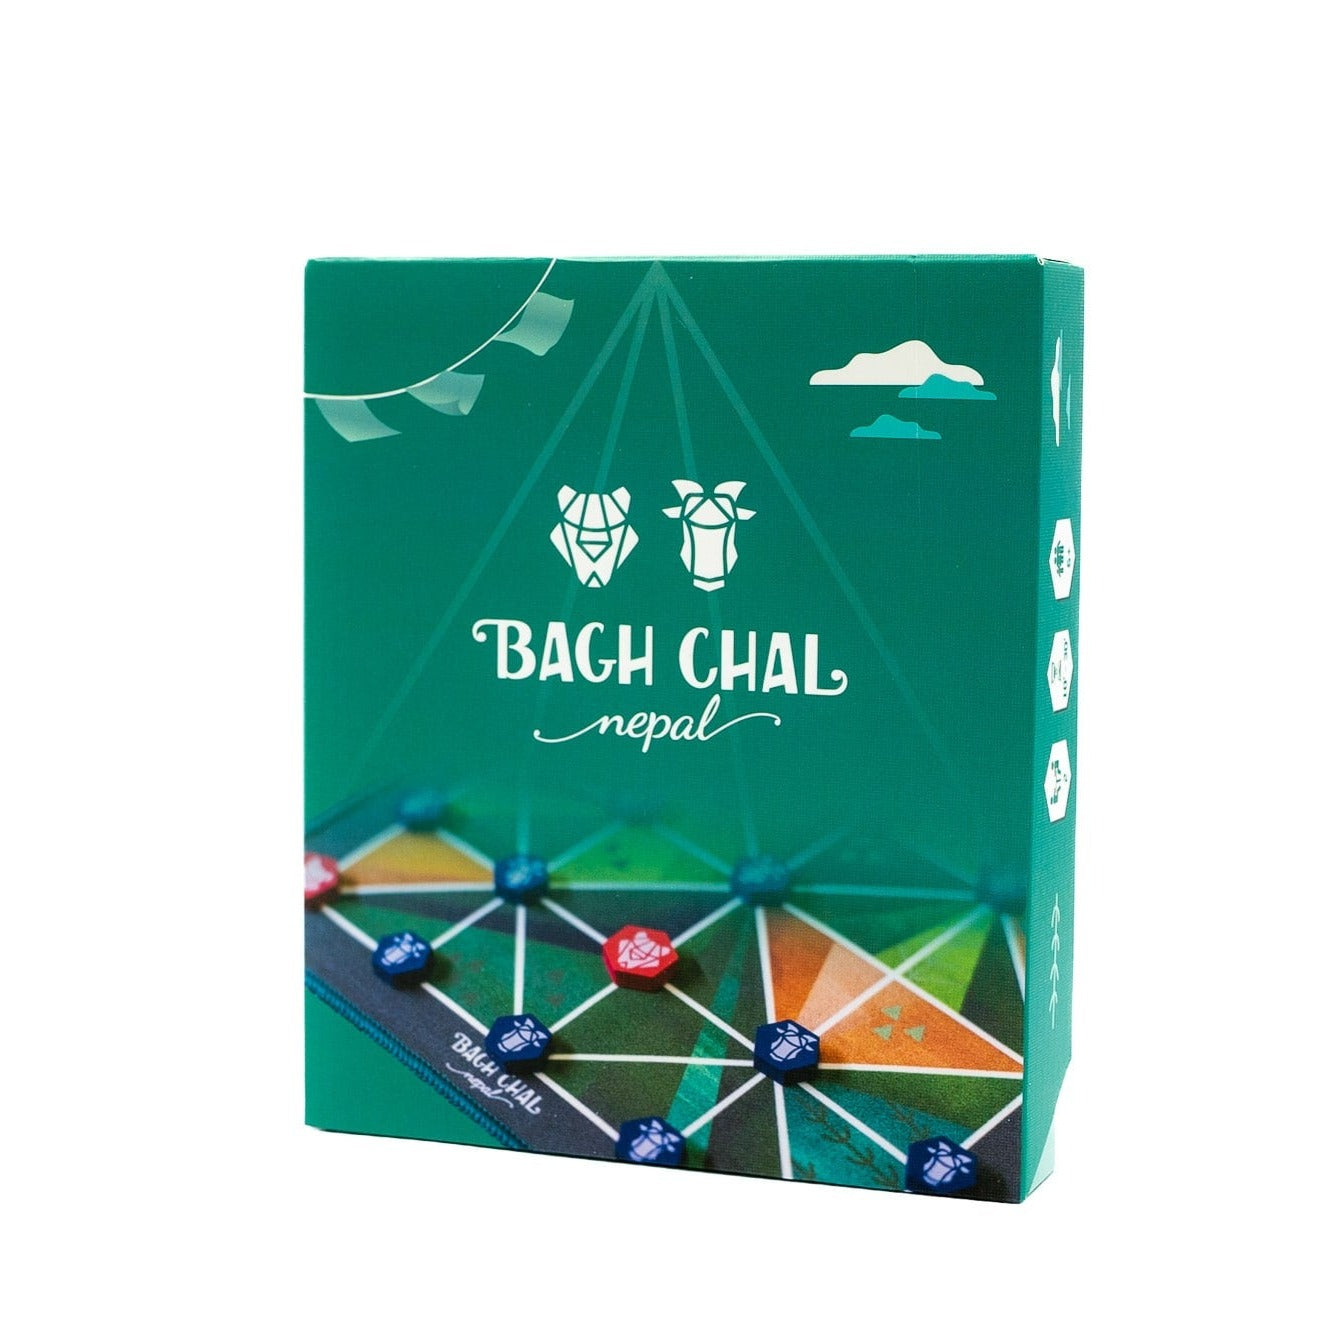 Bagh Chal box